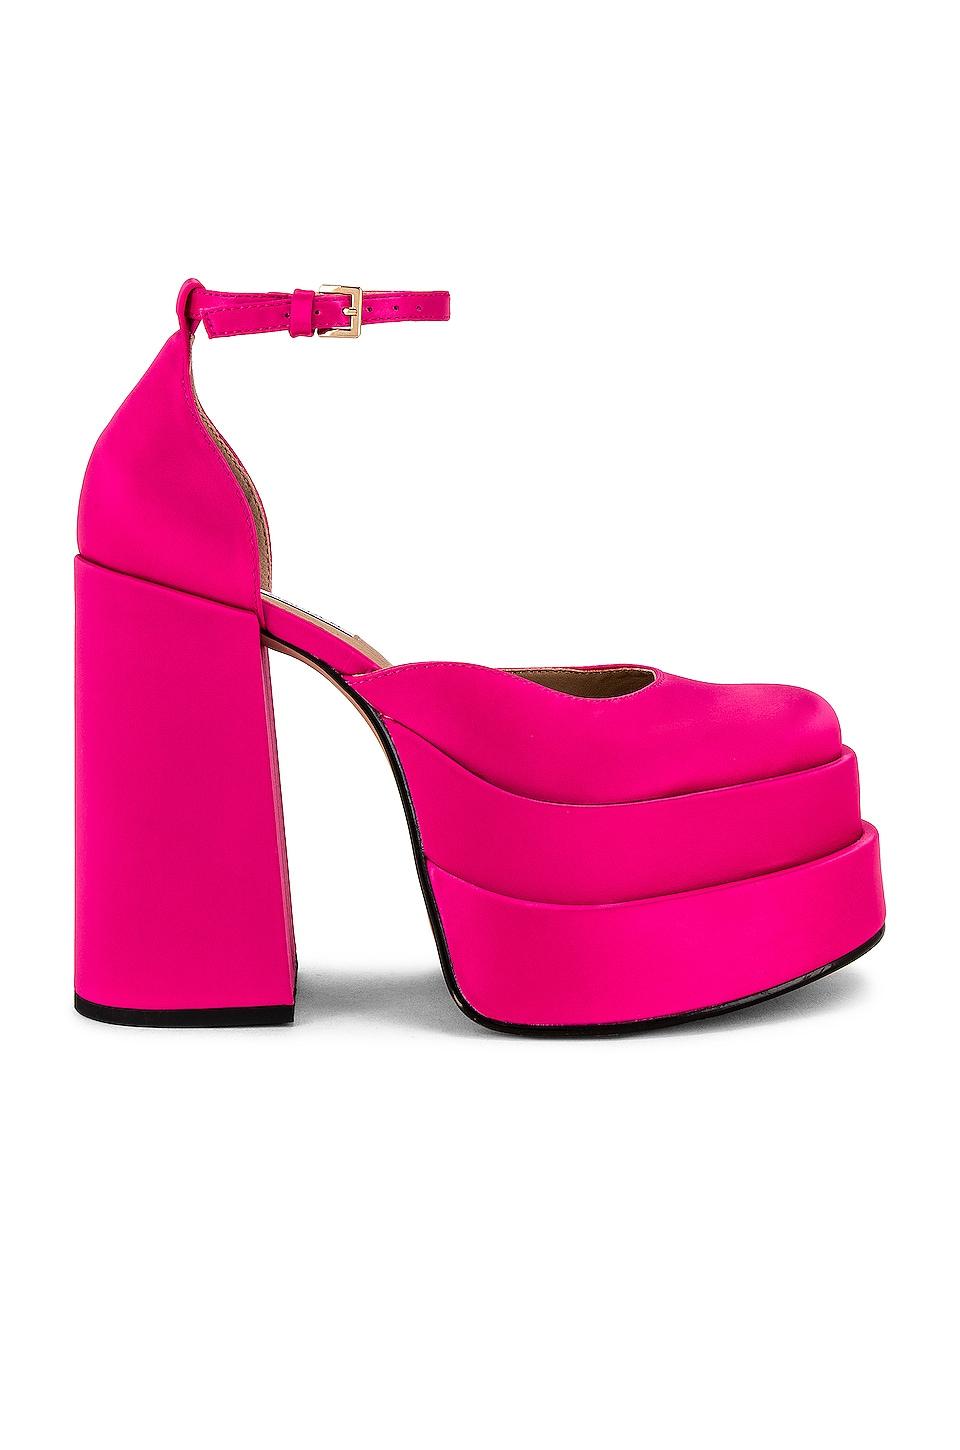 Steve Madden Charlize Platform In Pink Lyst